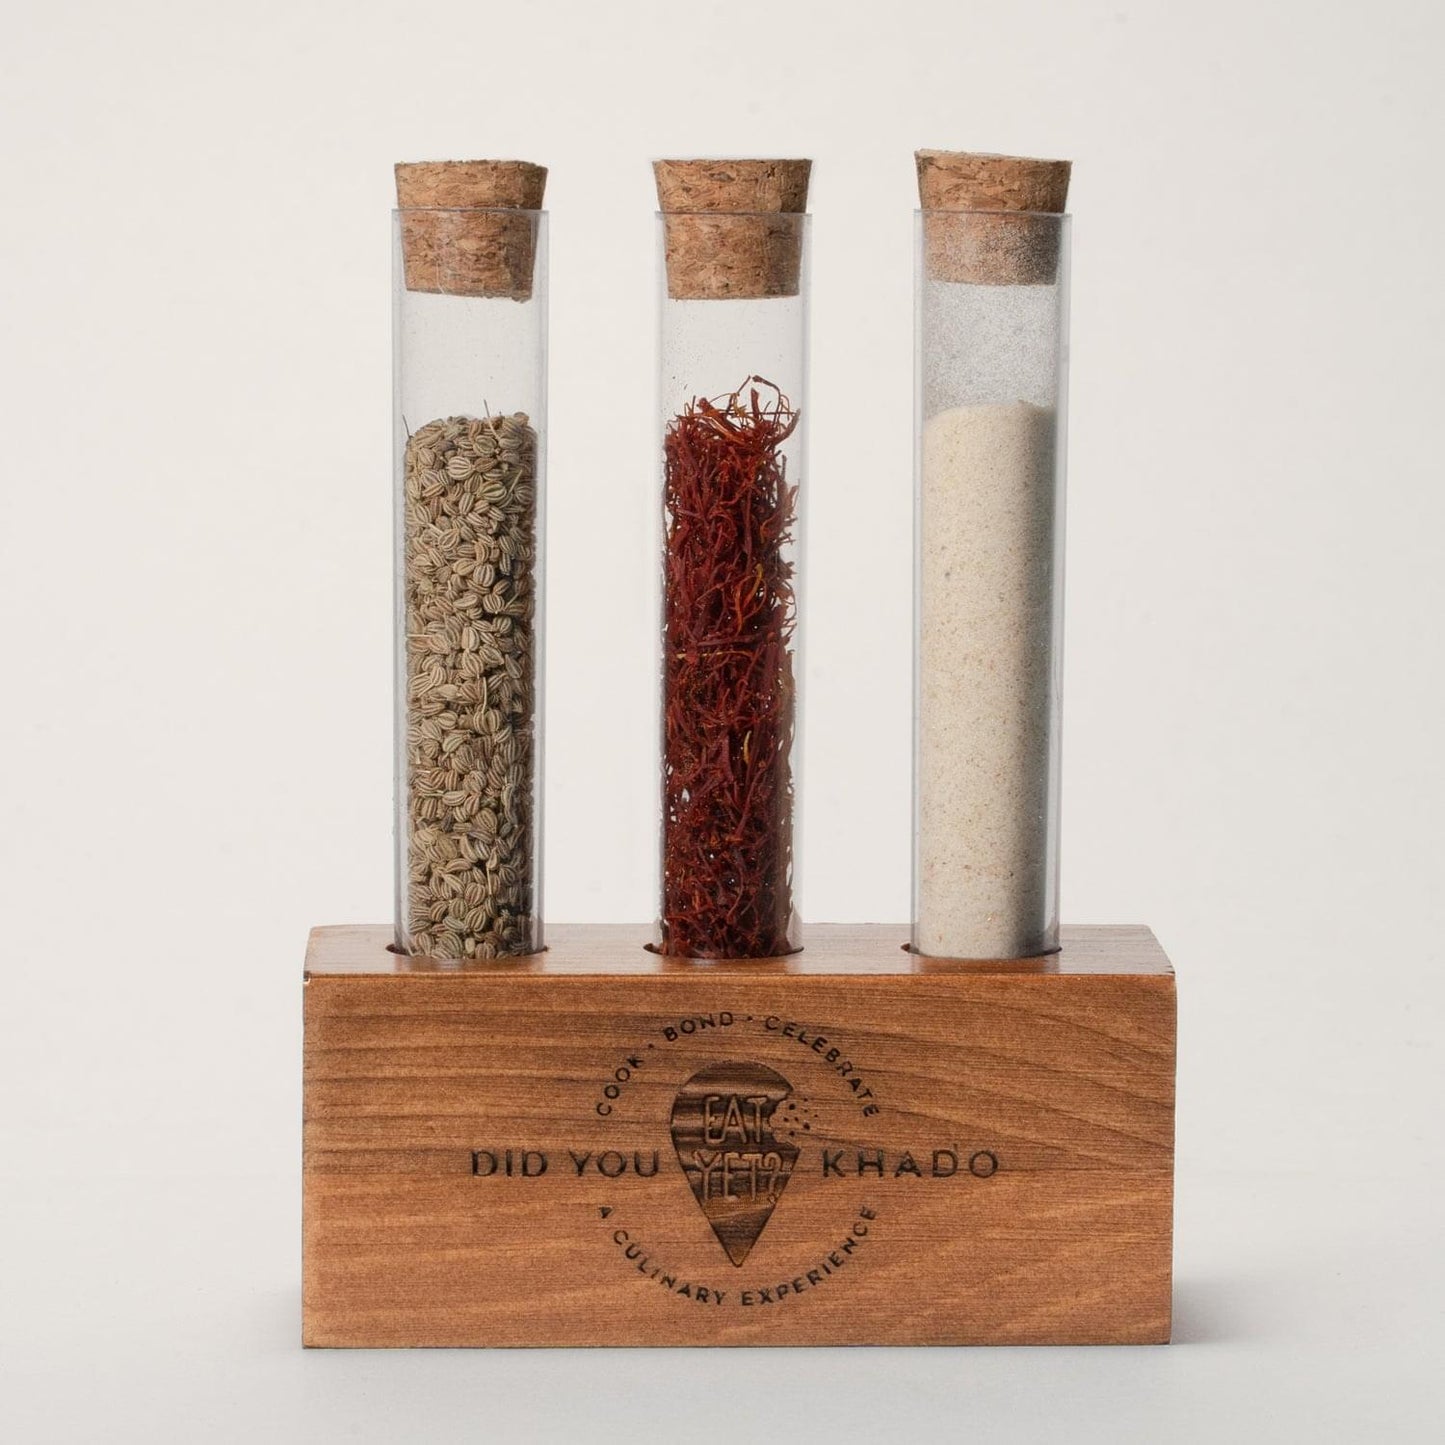 Buy Rare Spices Kit  Shop Rare Spices Kit